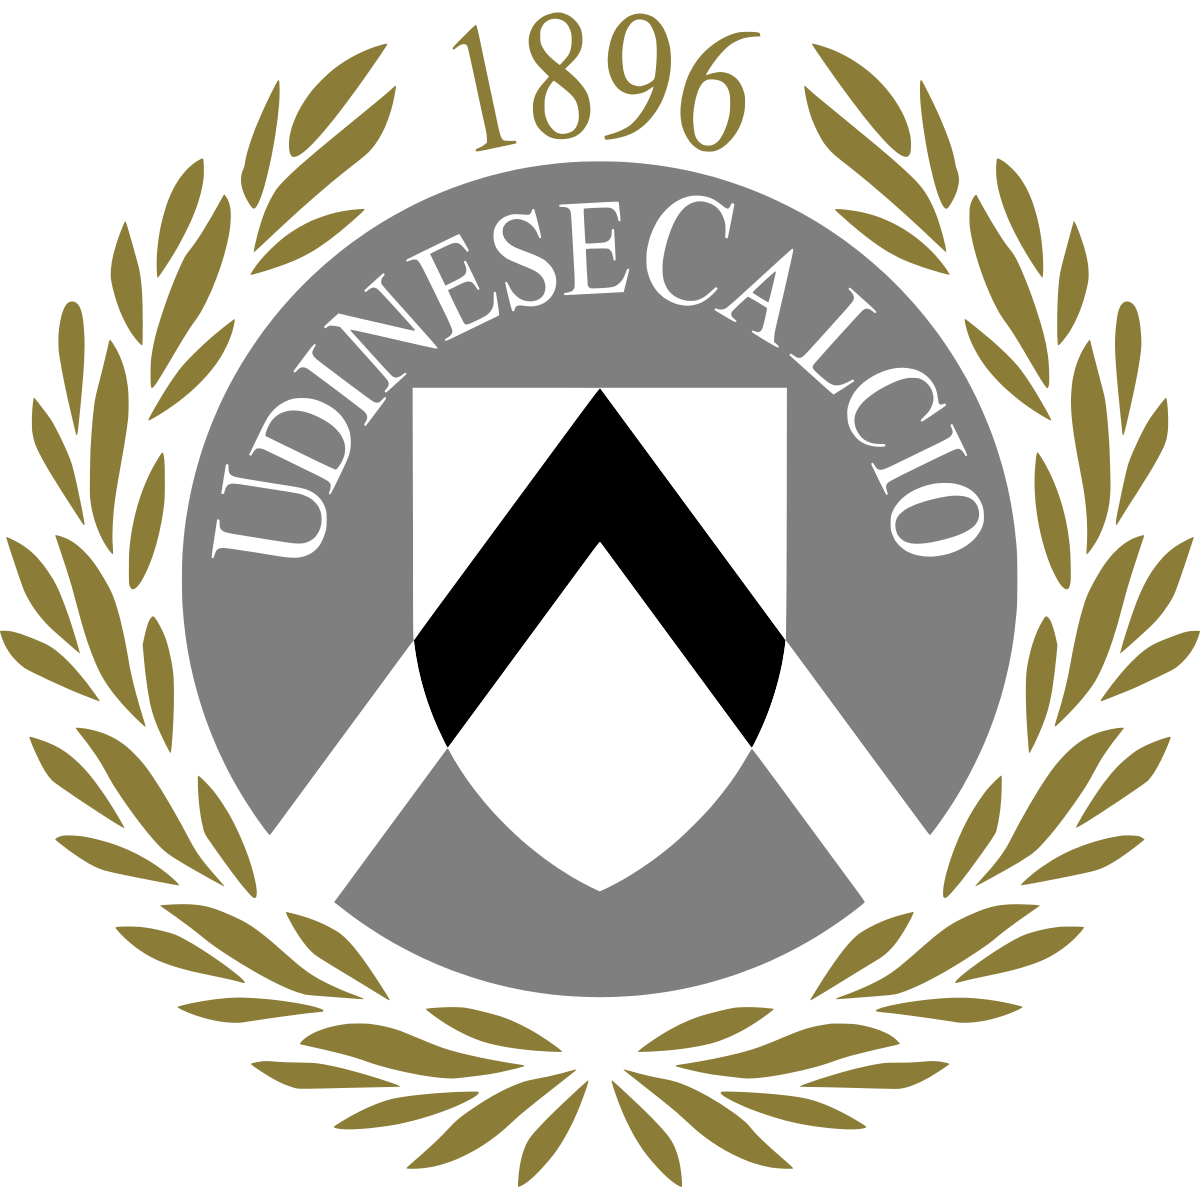 Udinese Calcio - ijersey